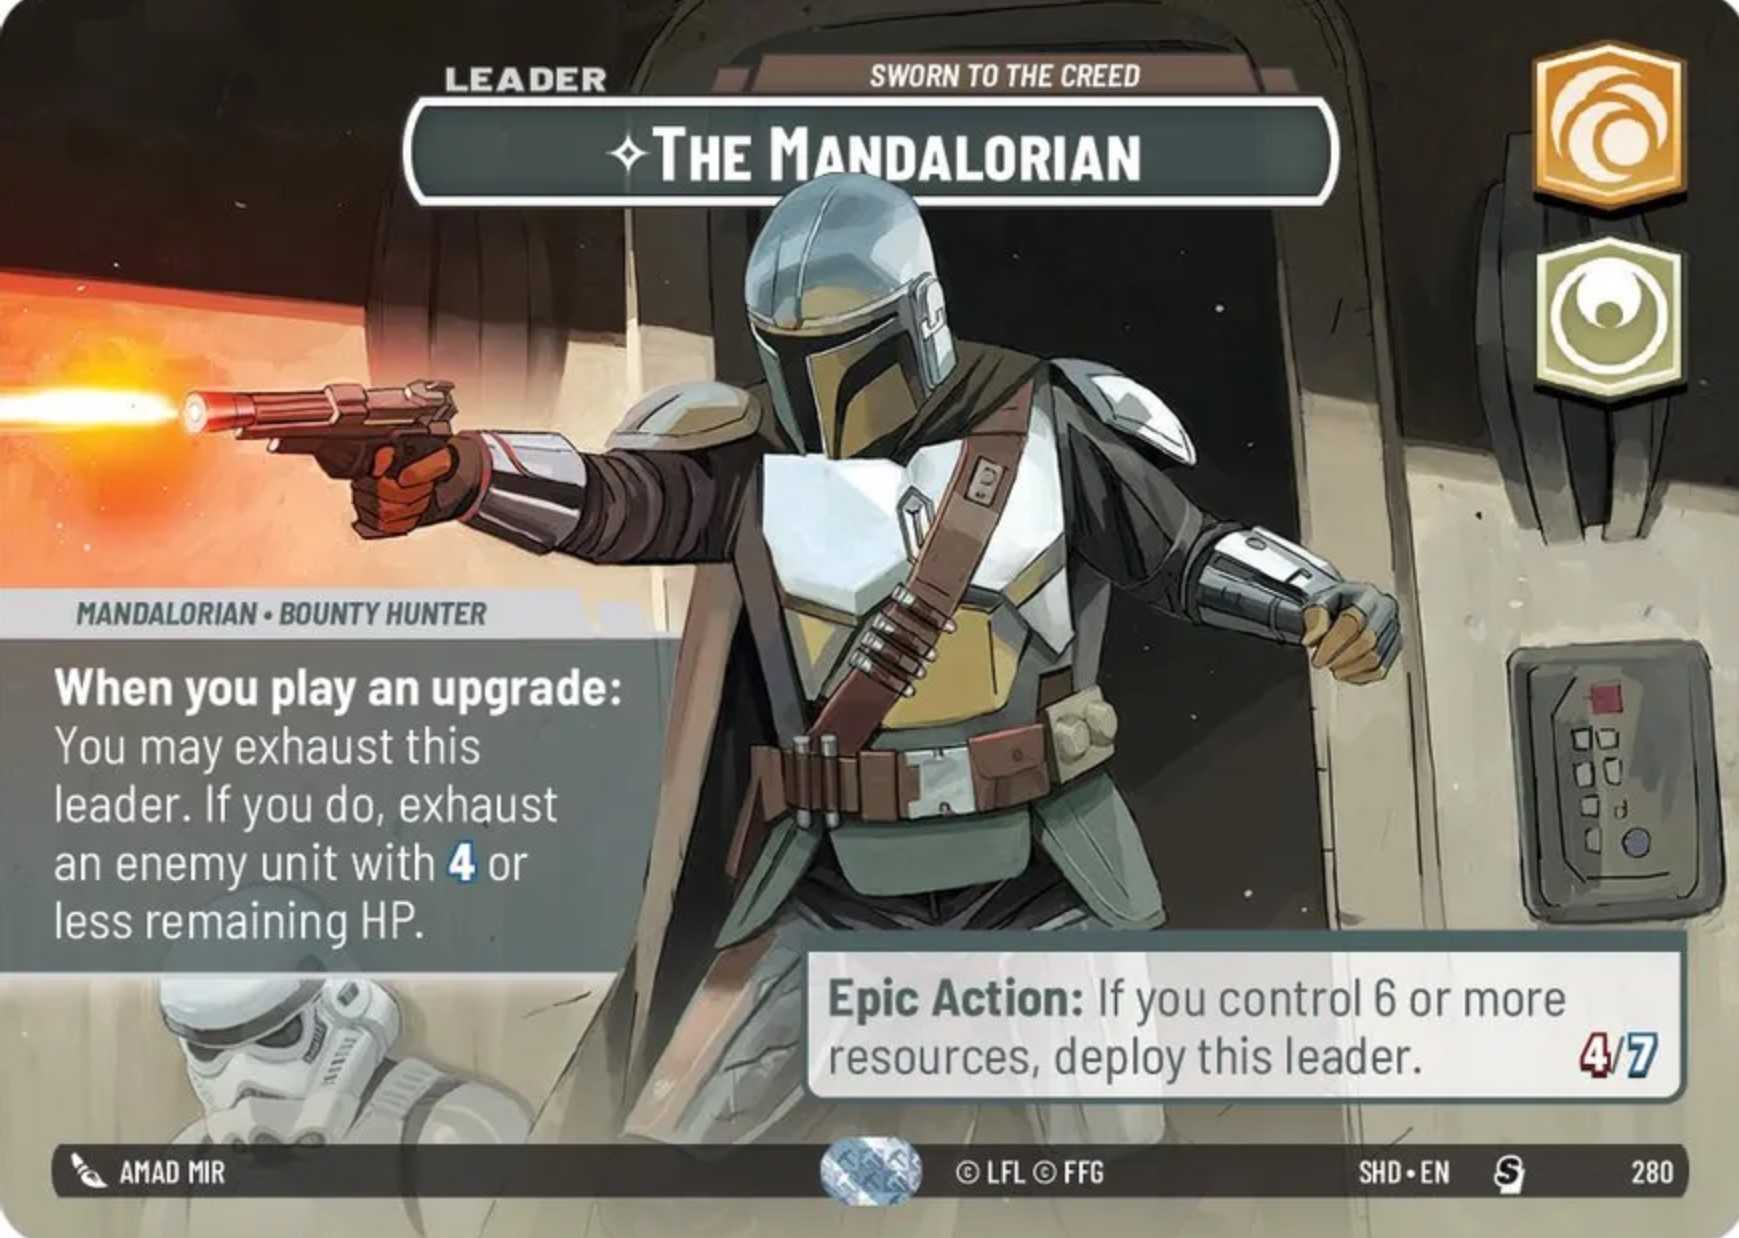 The Mandalorian Showcase card in Star Wars Unlimited